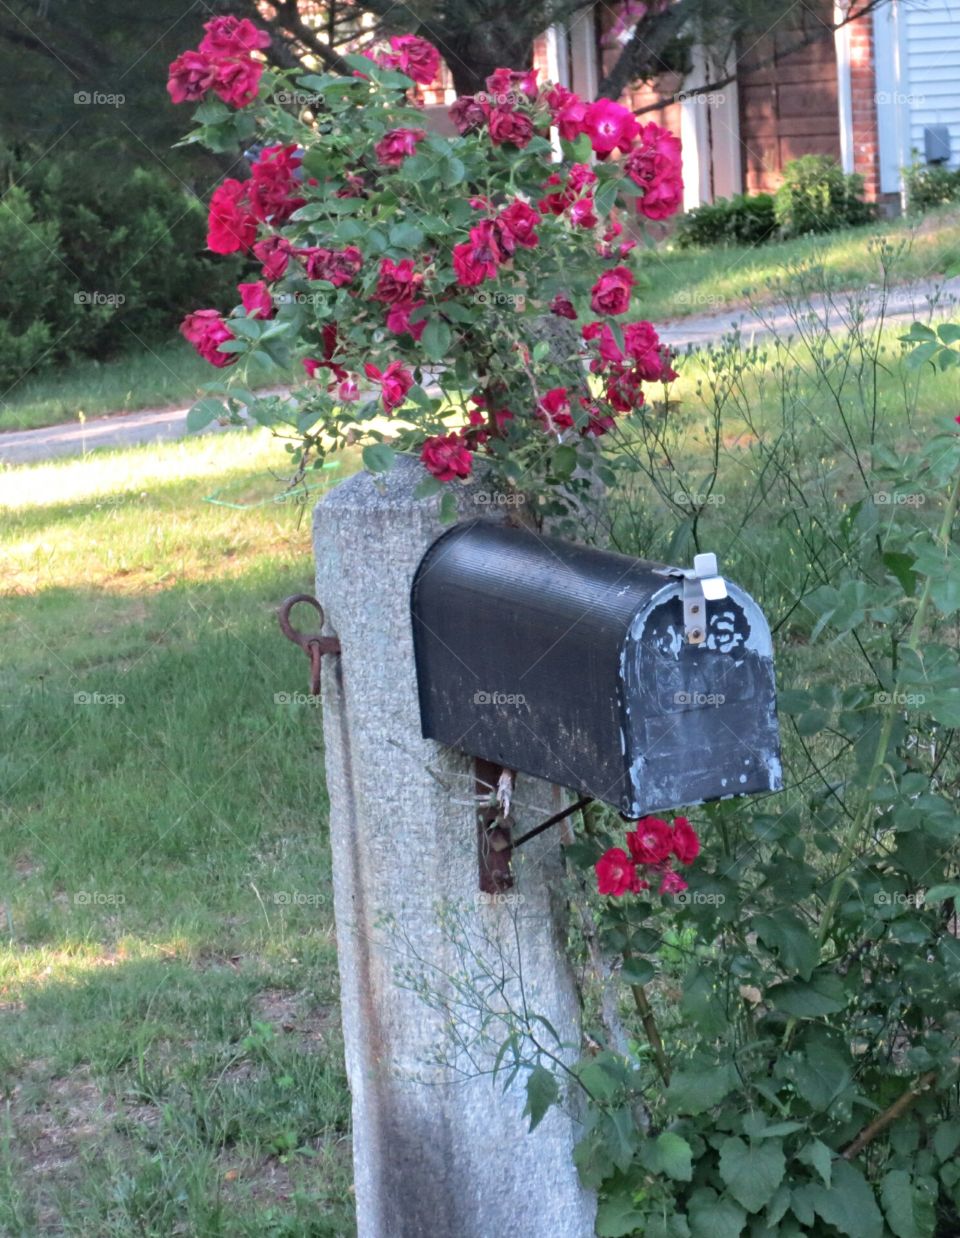 flowers on mailbox